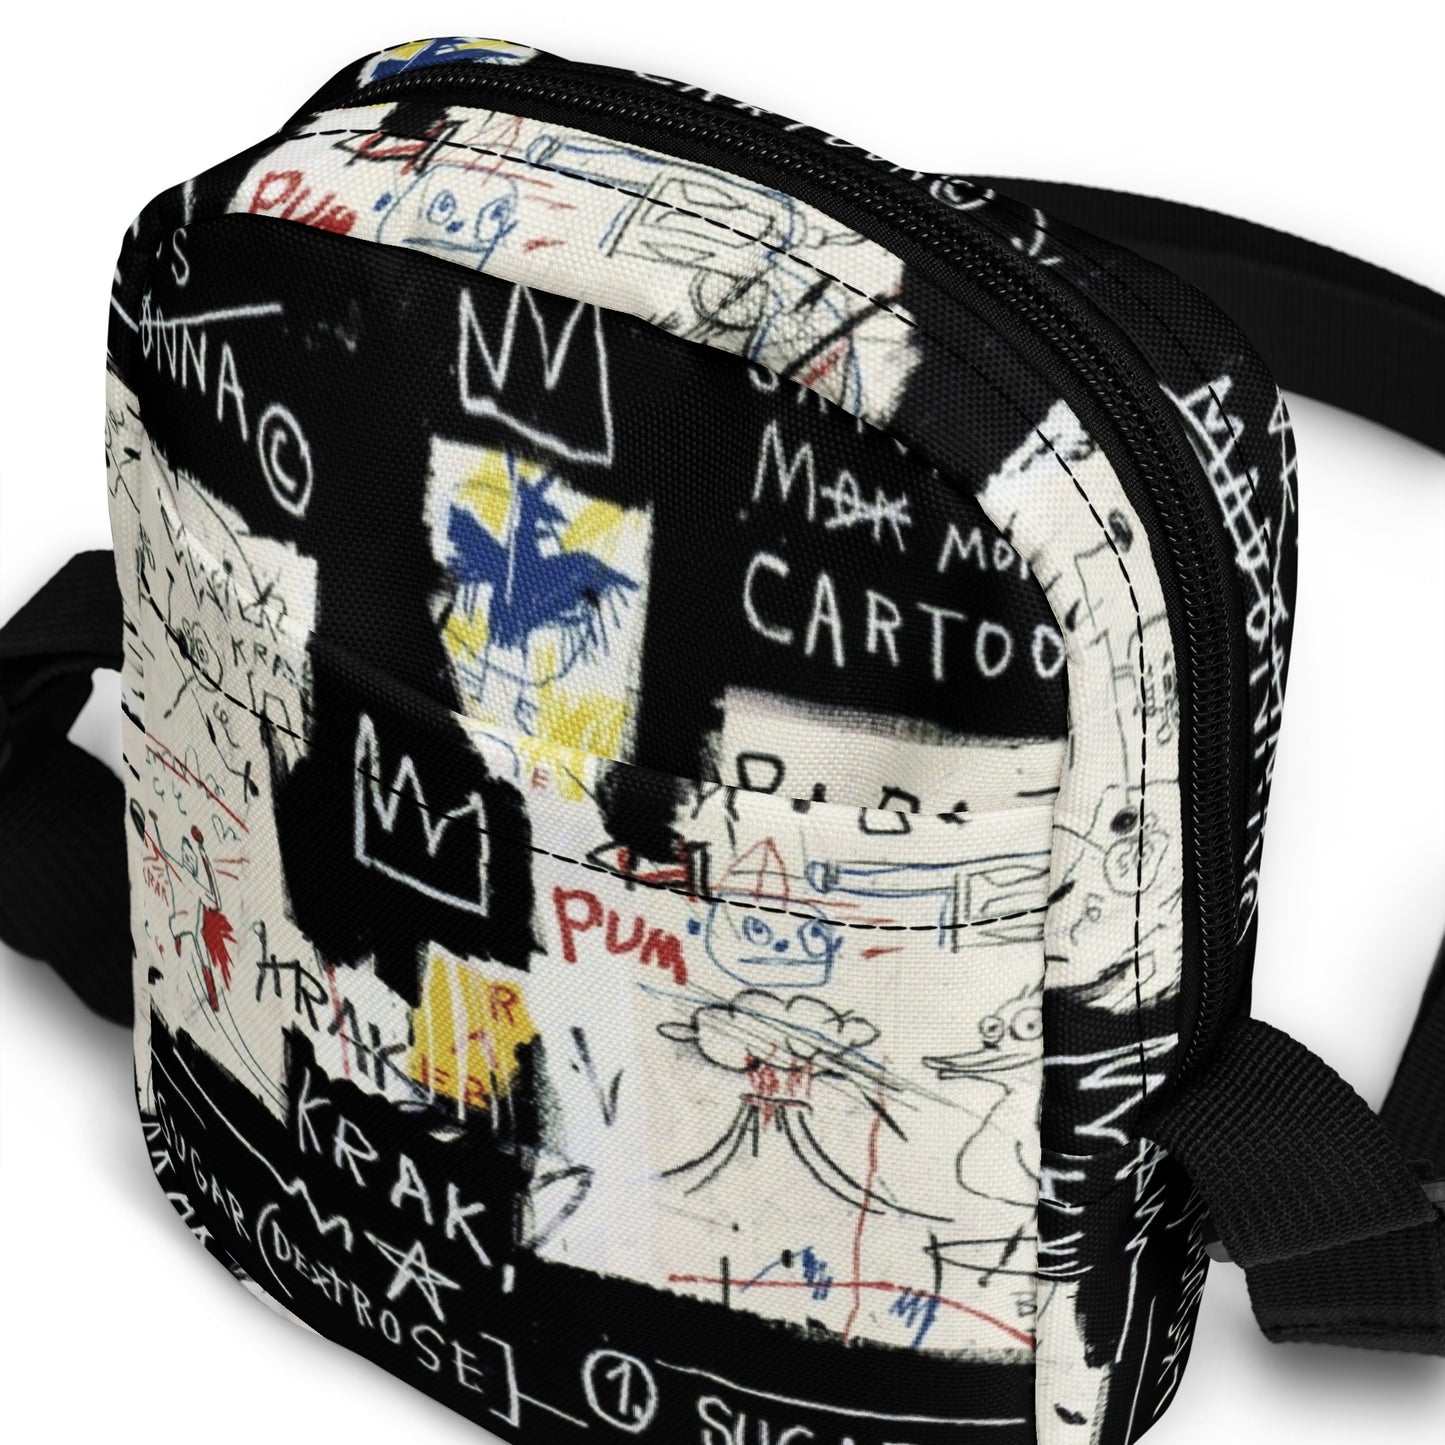 Jean-Michel Basquiat "A Panel of Experts" Artwork Bag